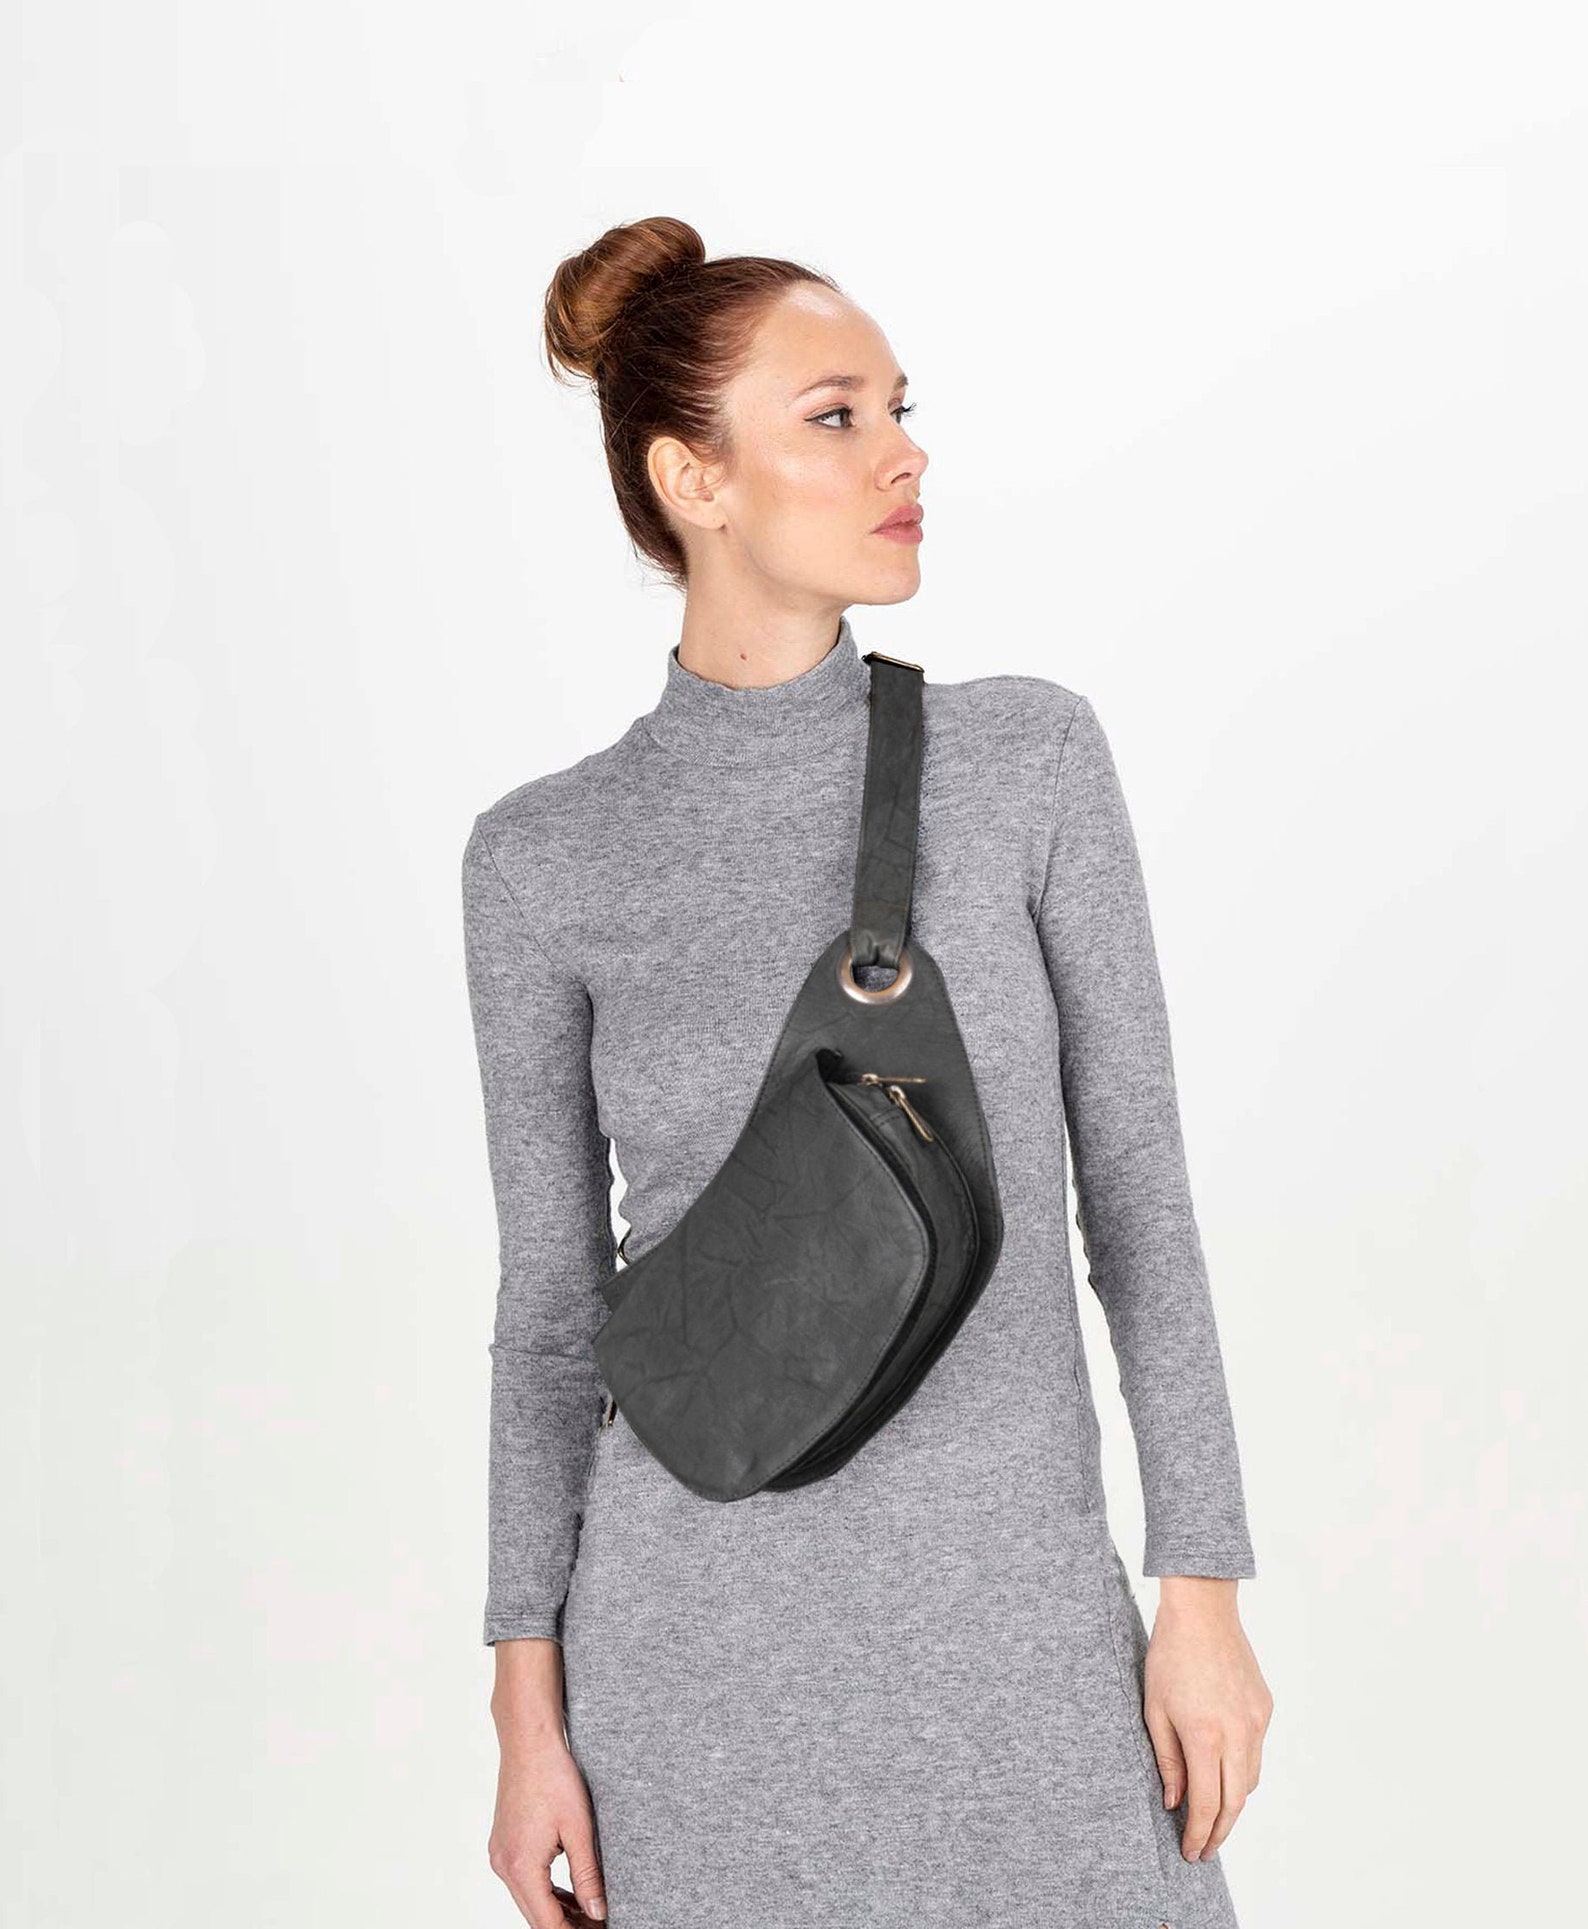 Grey Fanny Pack for Women Beautiful Sling Bag Travel Bag for | Etsy